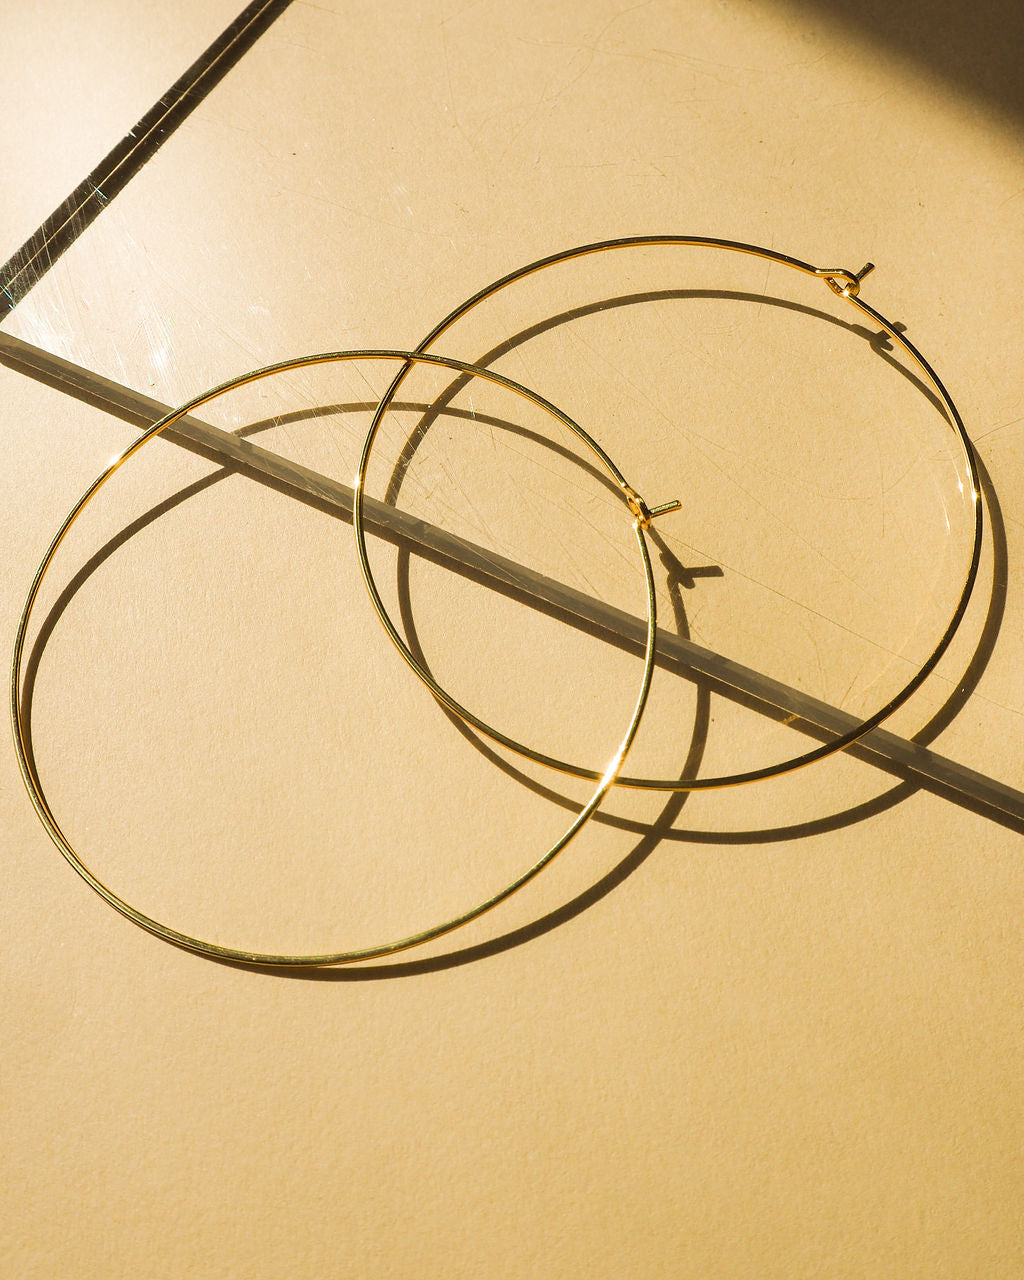 Luv Aj Capri Large Thin Wire Hoop Earrings in Polished 14k Gold